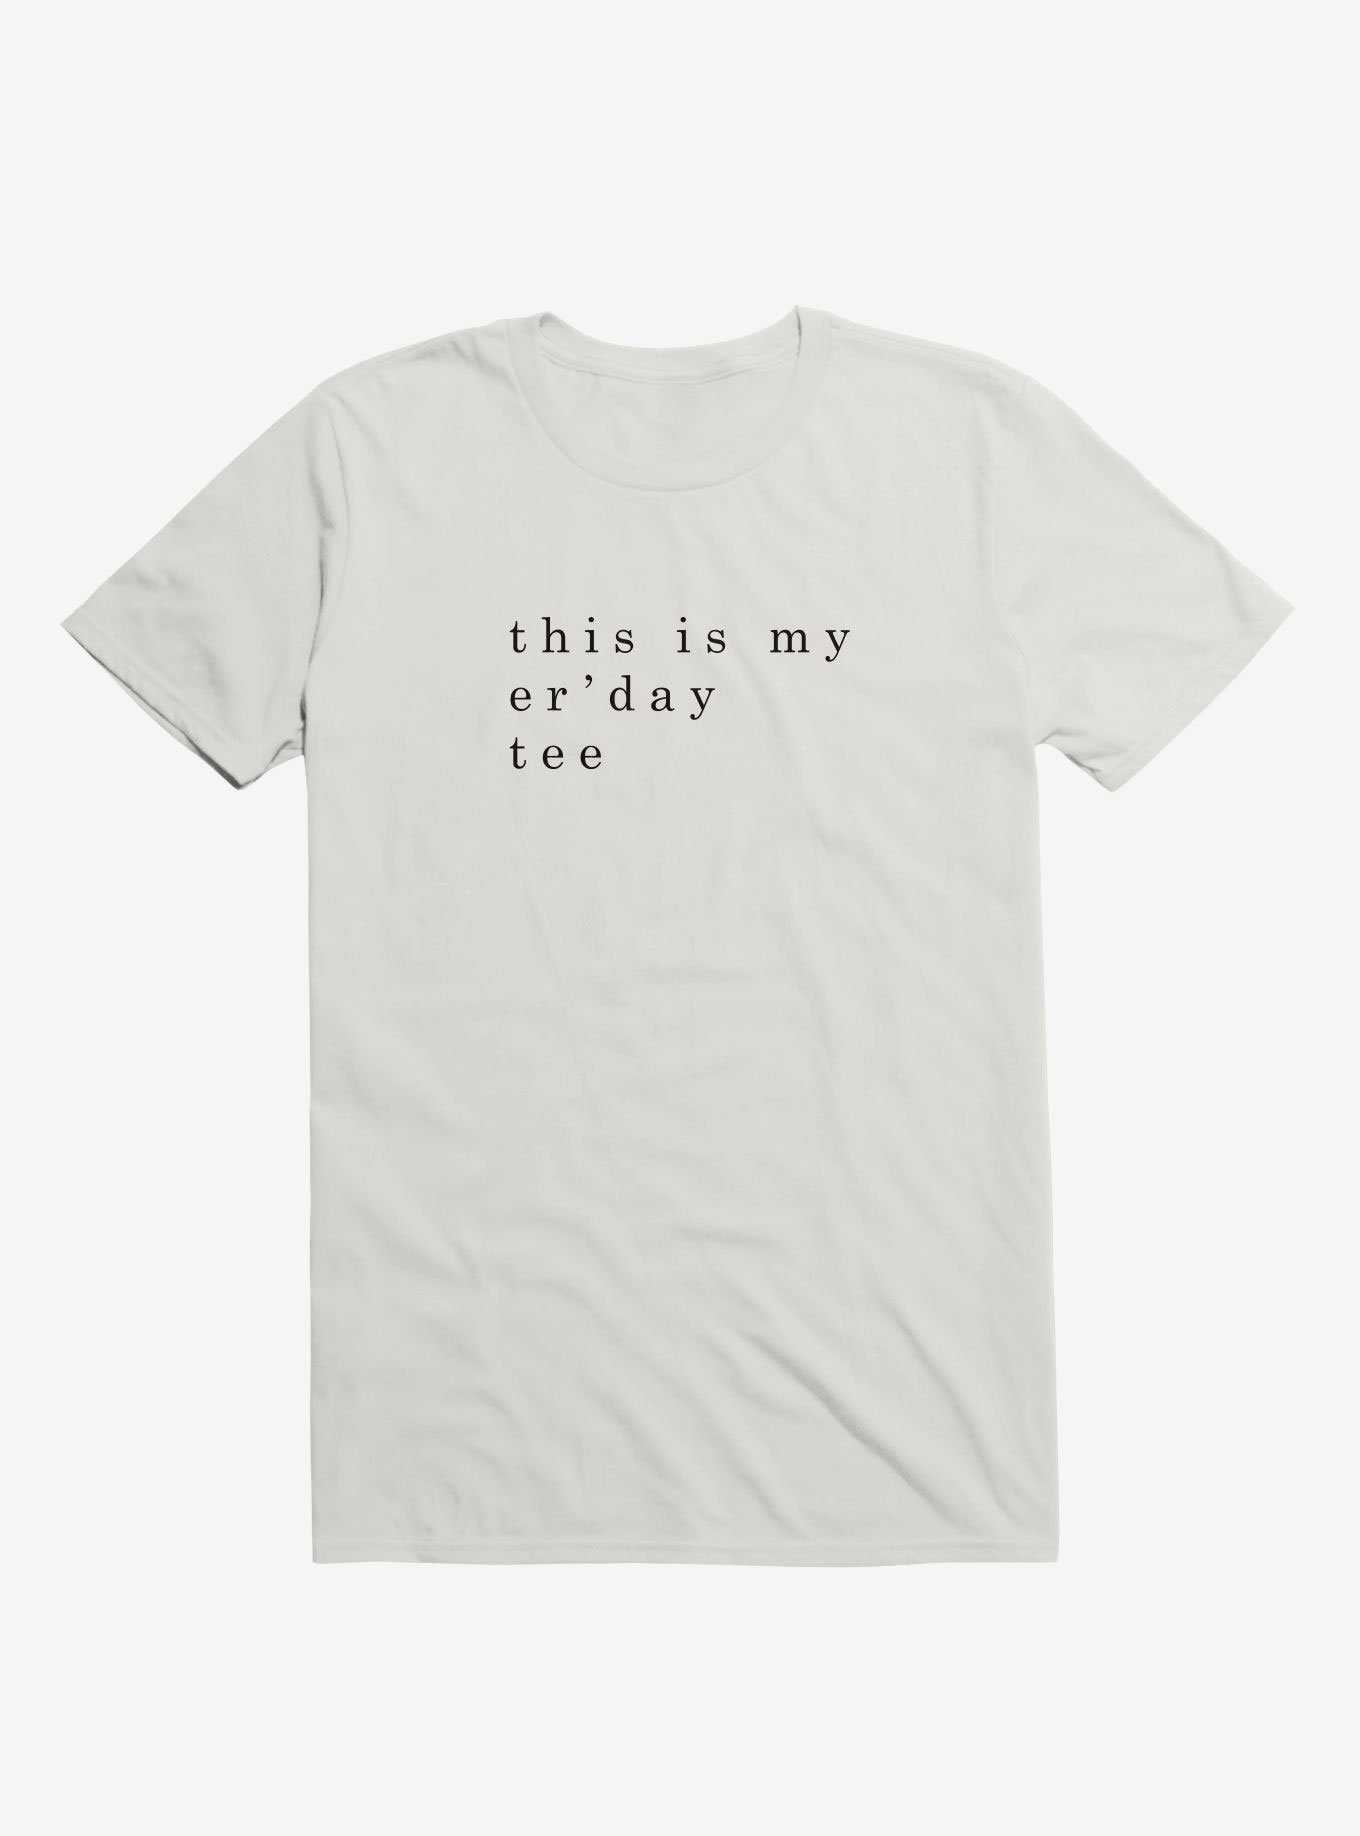 my er'day tee T-Shirt, , hi-res